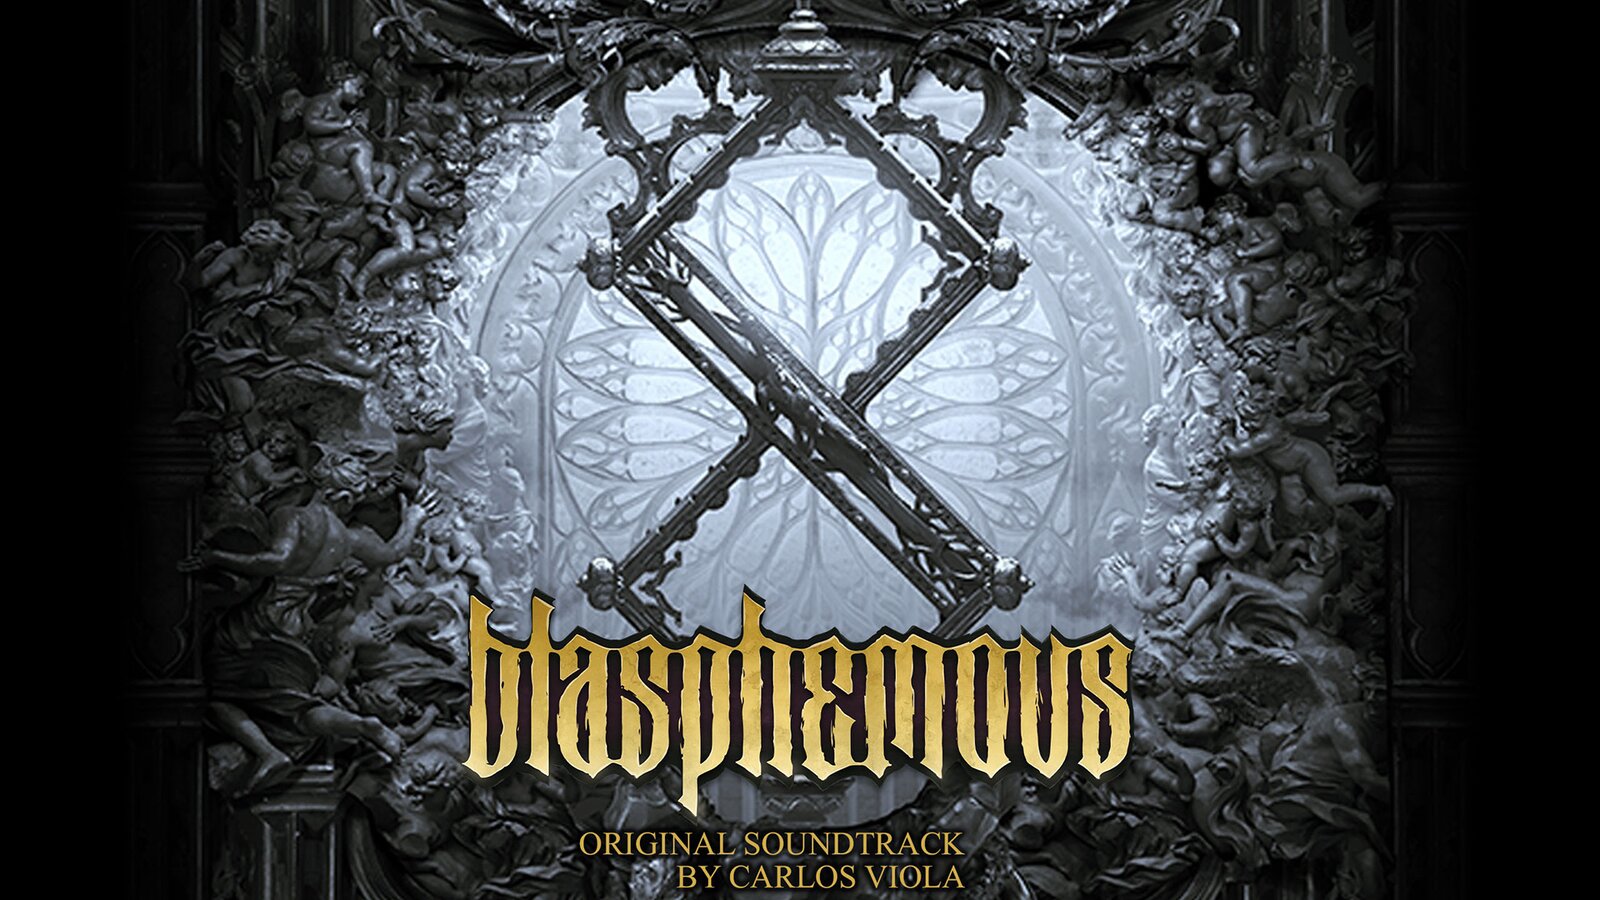 Blasphemous - Original Soundtrack